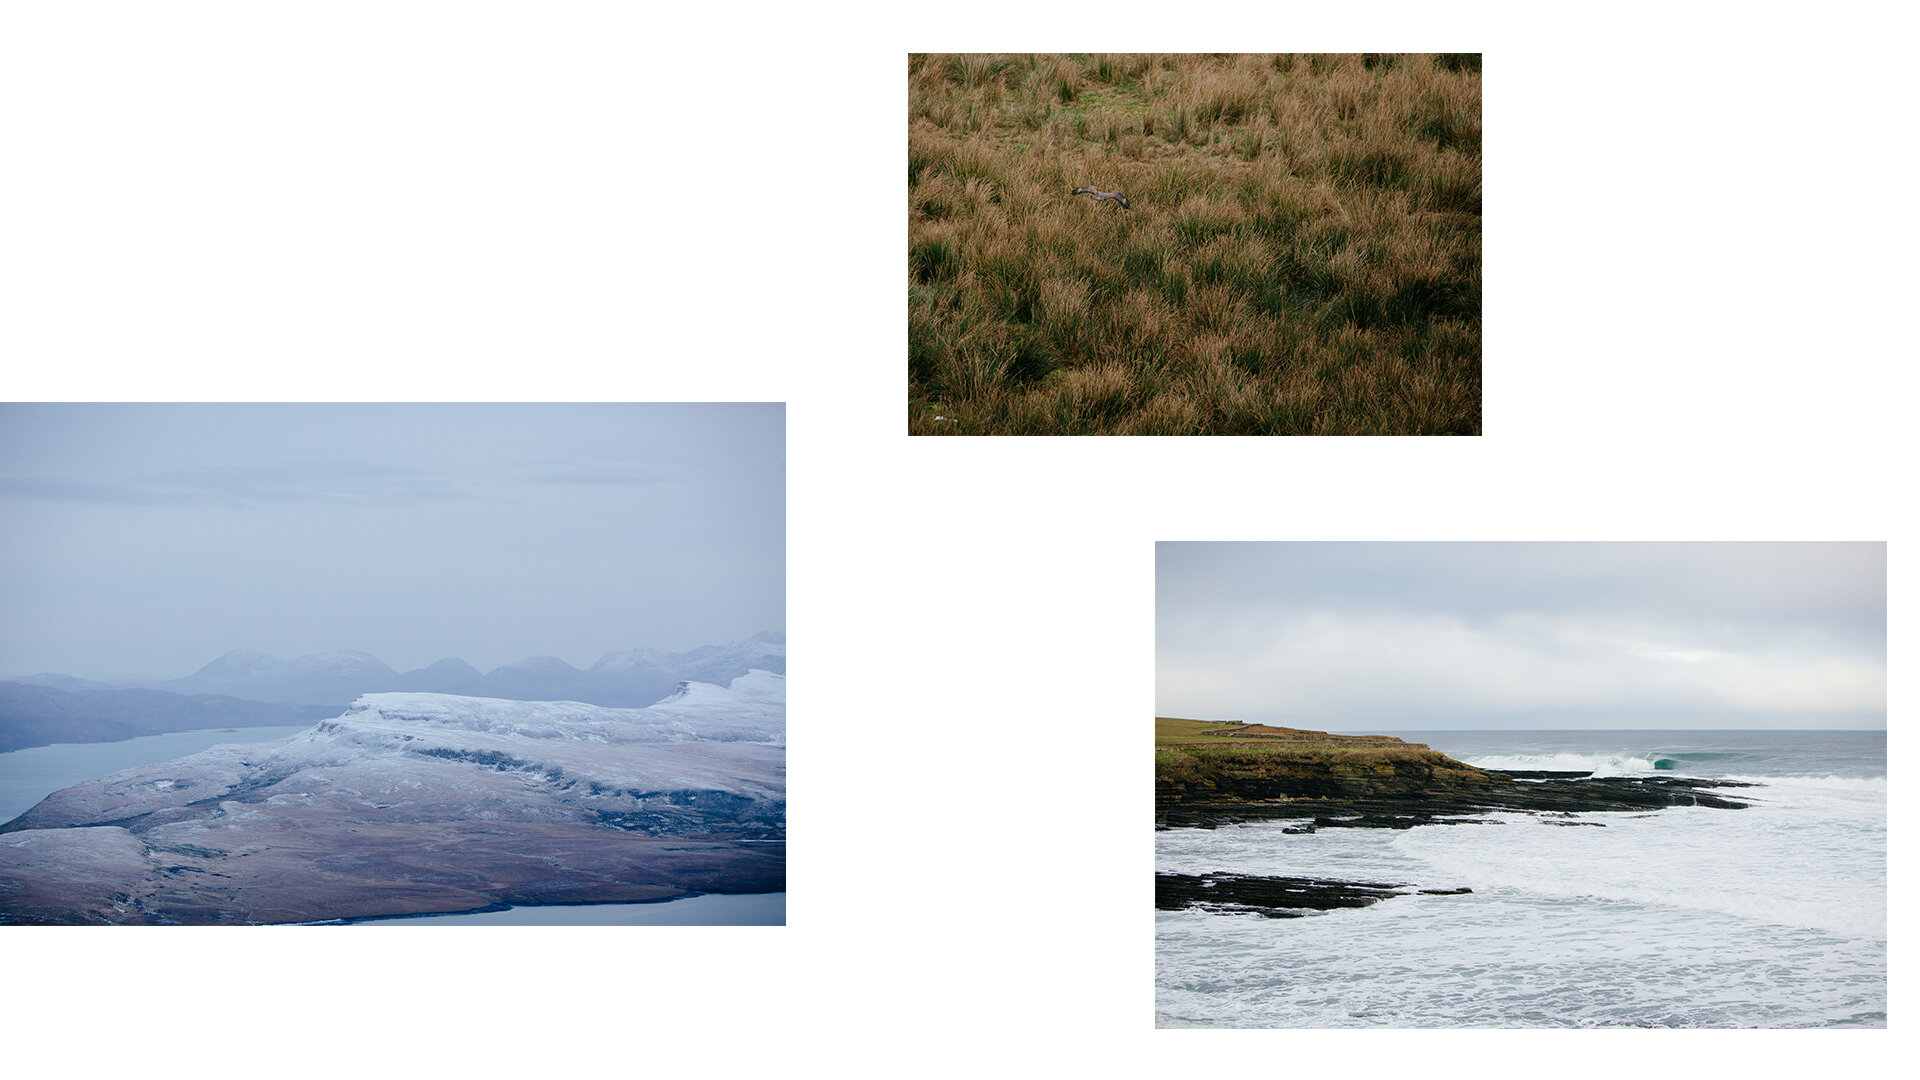 toby-butler-photographer-photography-scotland-surfing-surf-landscape-travelphotographer-inkglobal-portrait-tourism-ocean-north-photo-surfer-love-earth-climate-planet-beautiful-wild-8.jpg